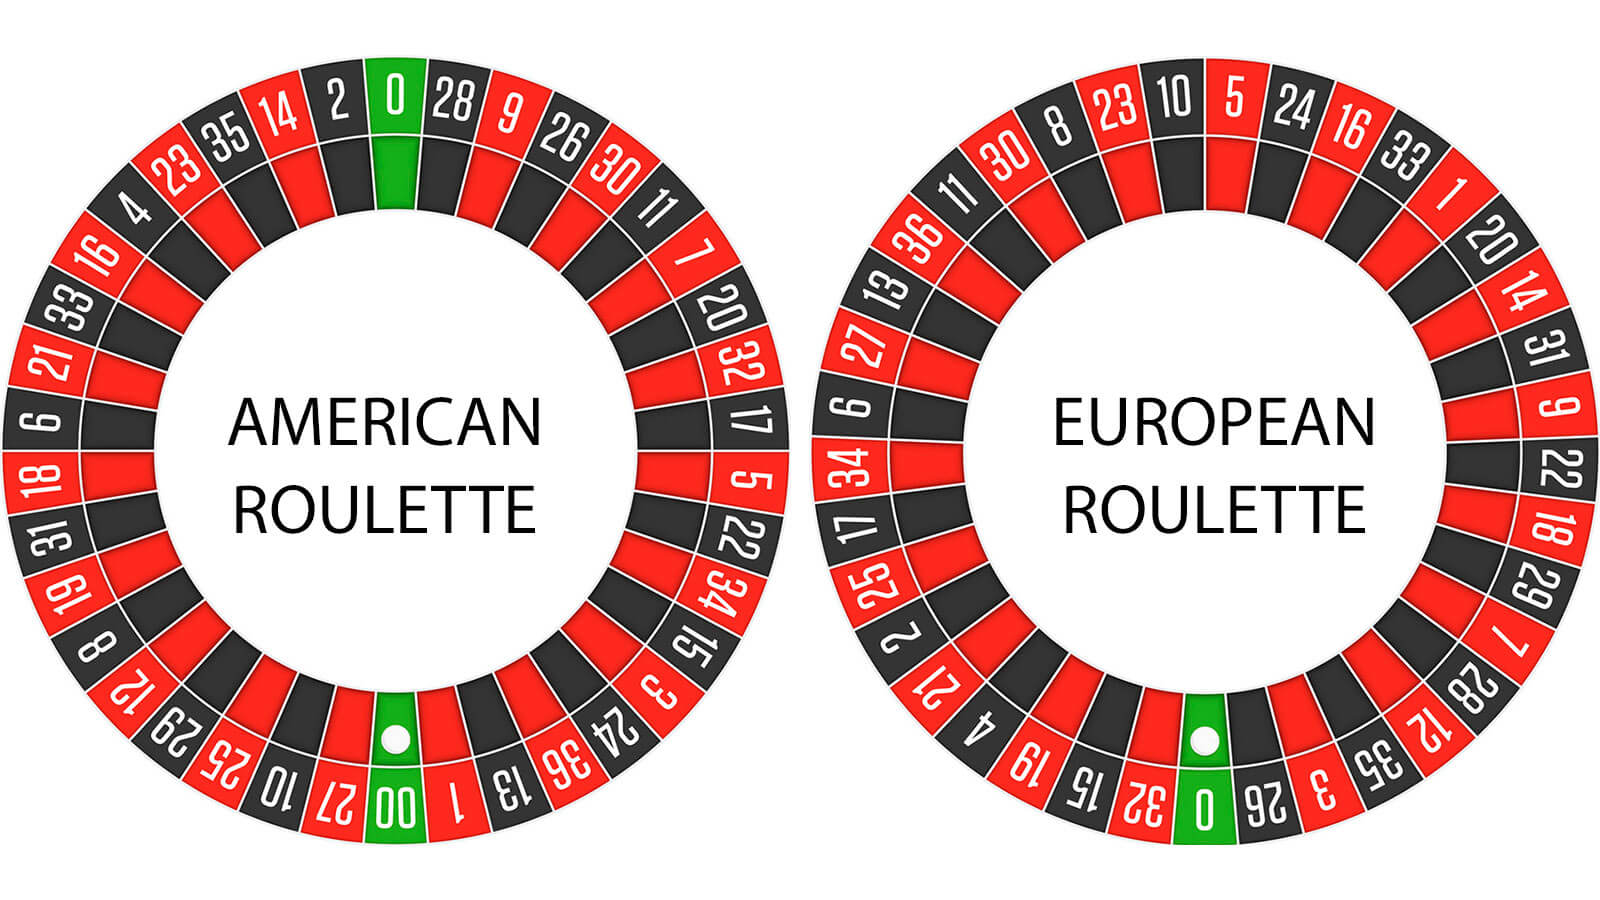 Roulette wheel with double zero